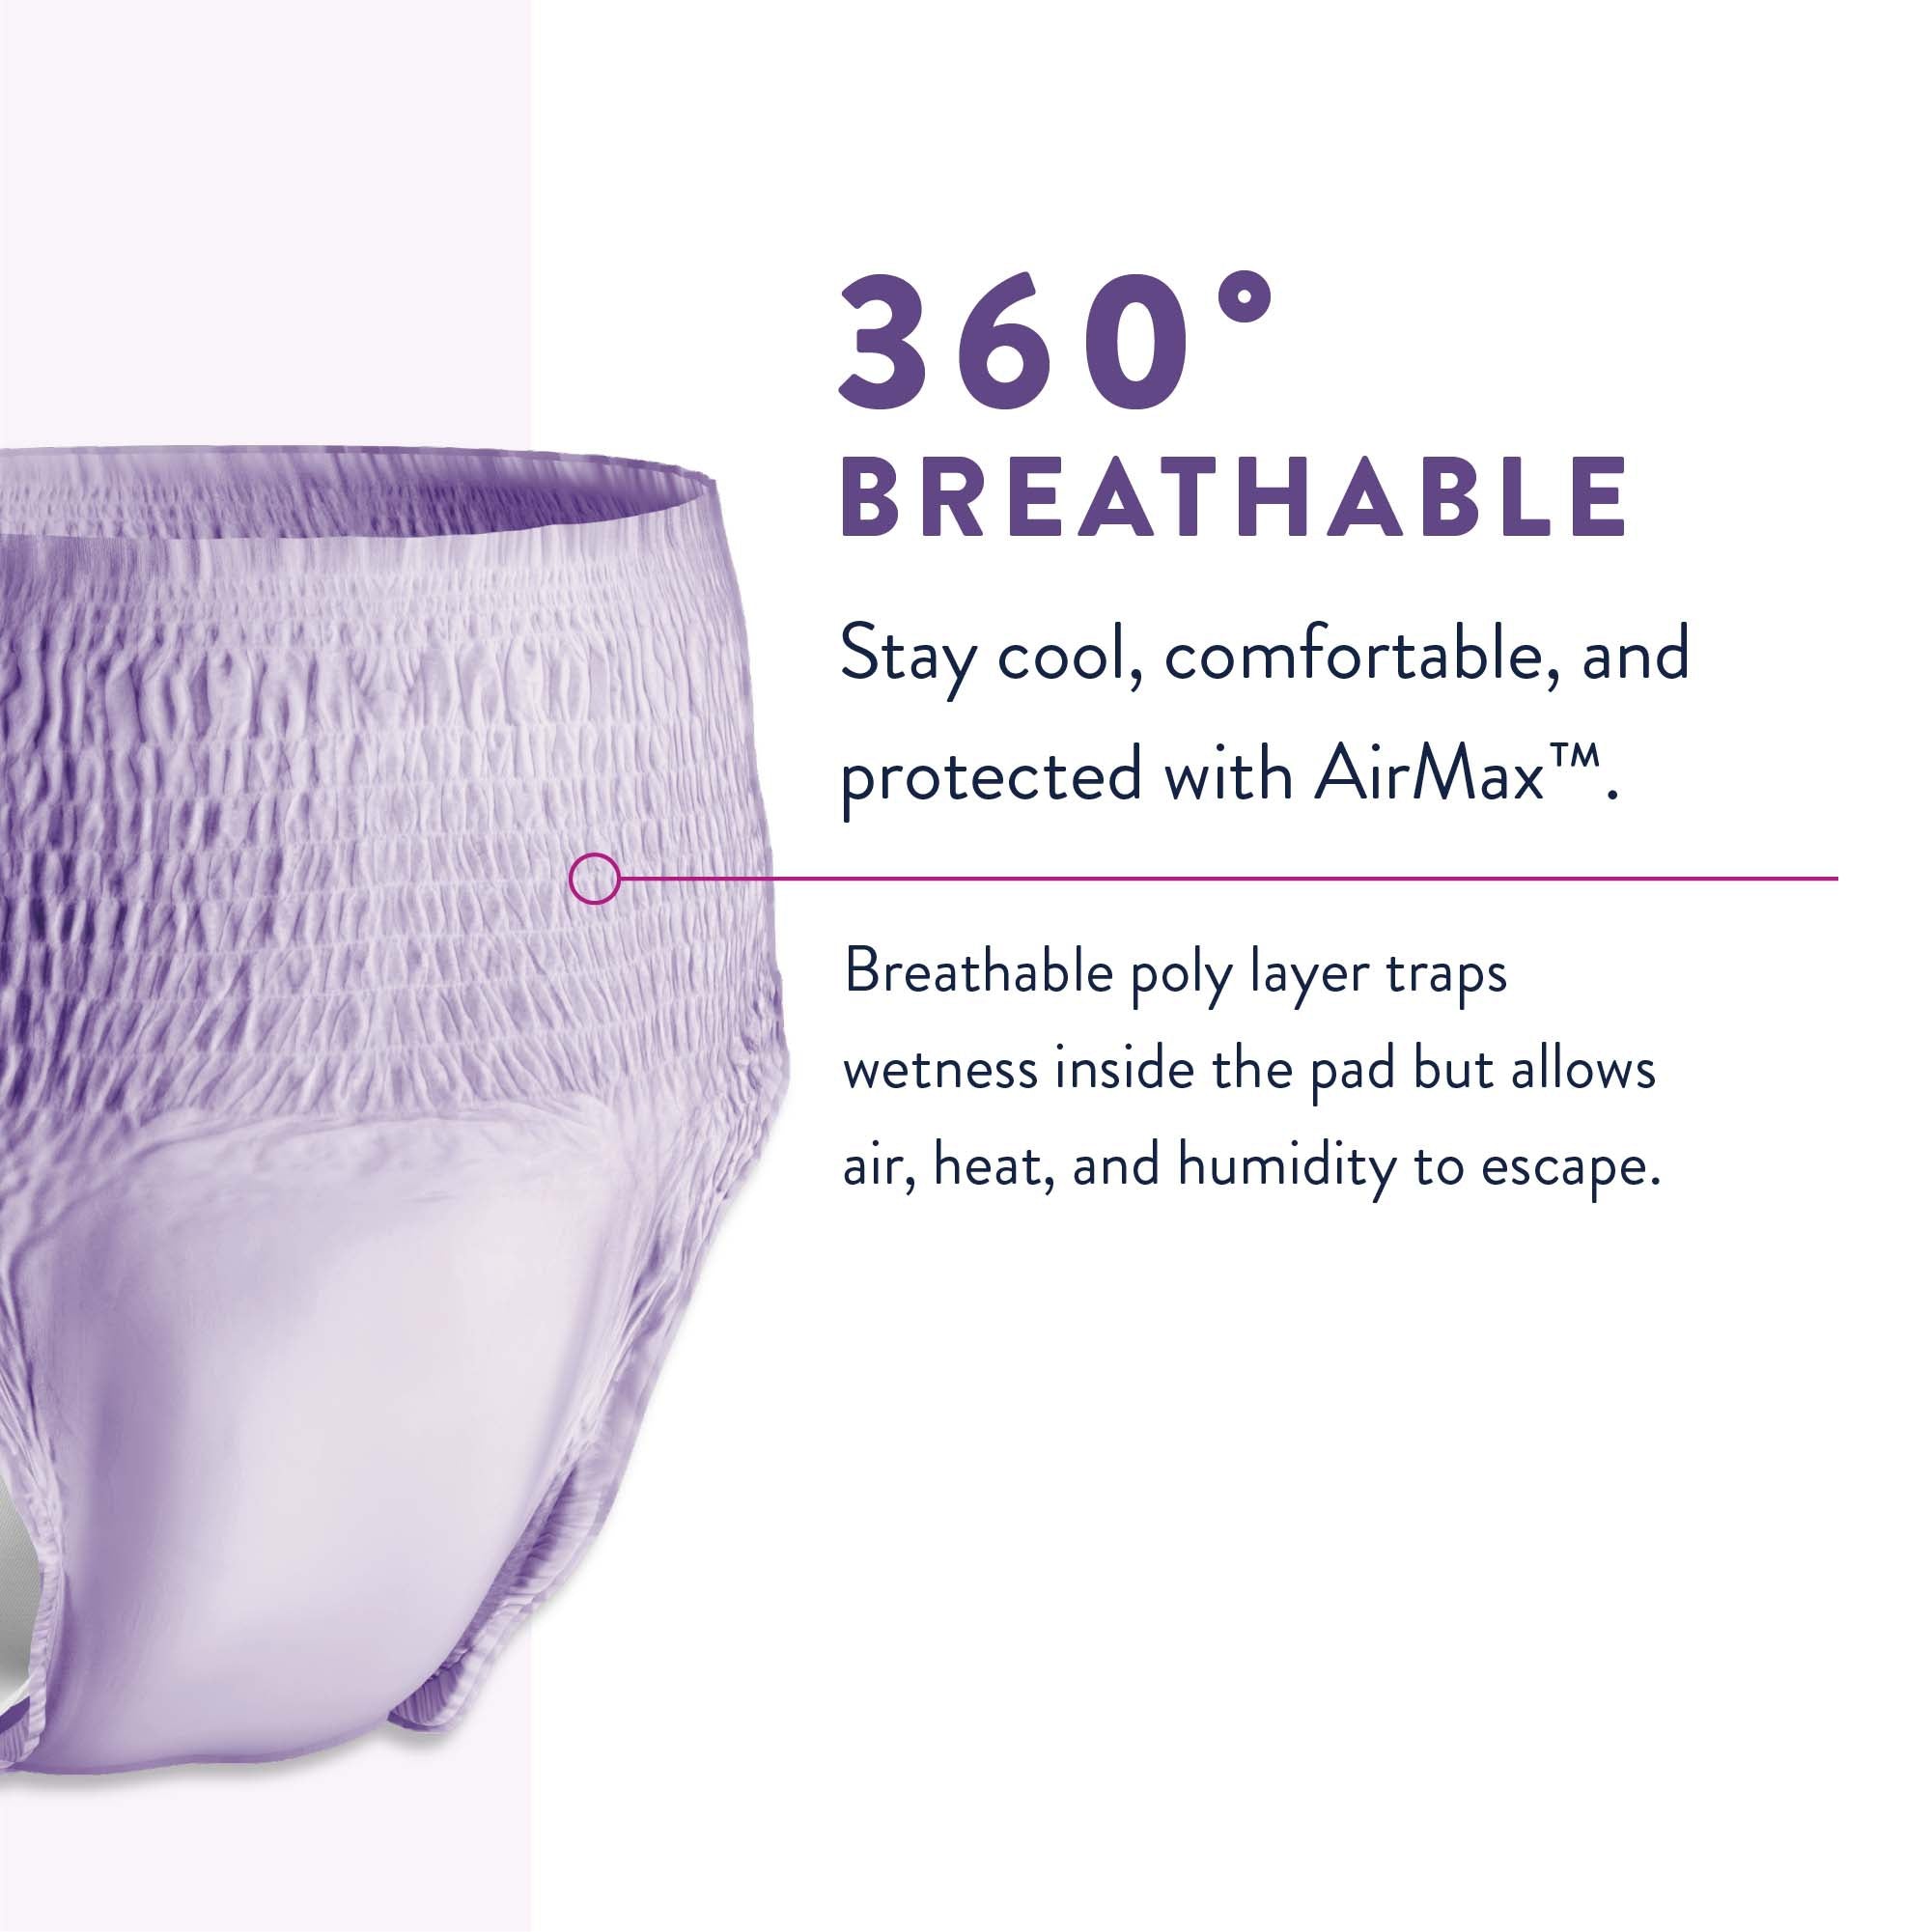 Prevail Per-Fit Women's Extra Absorbent Underwear, Medium - 20 Pack